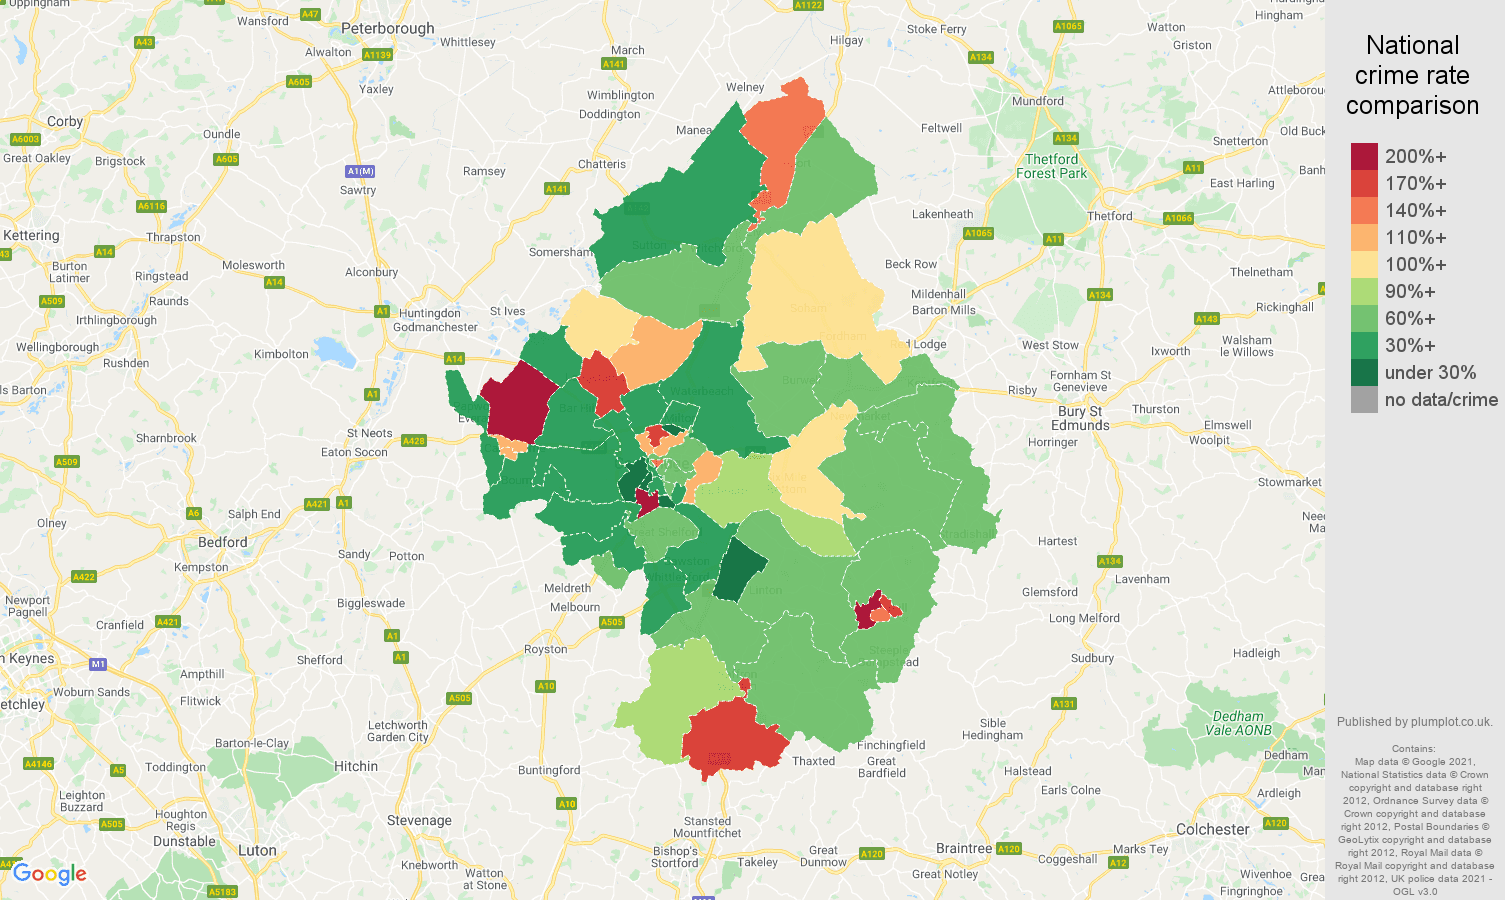 Cambridge criminal damage and arson crime rate comparison map